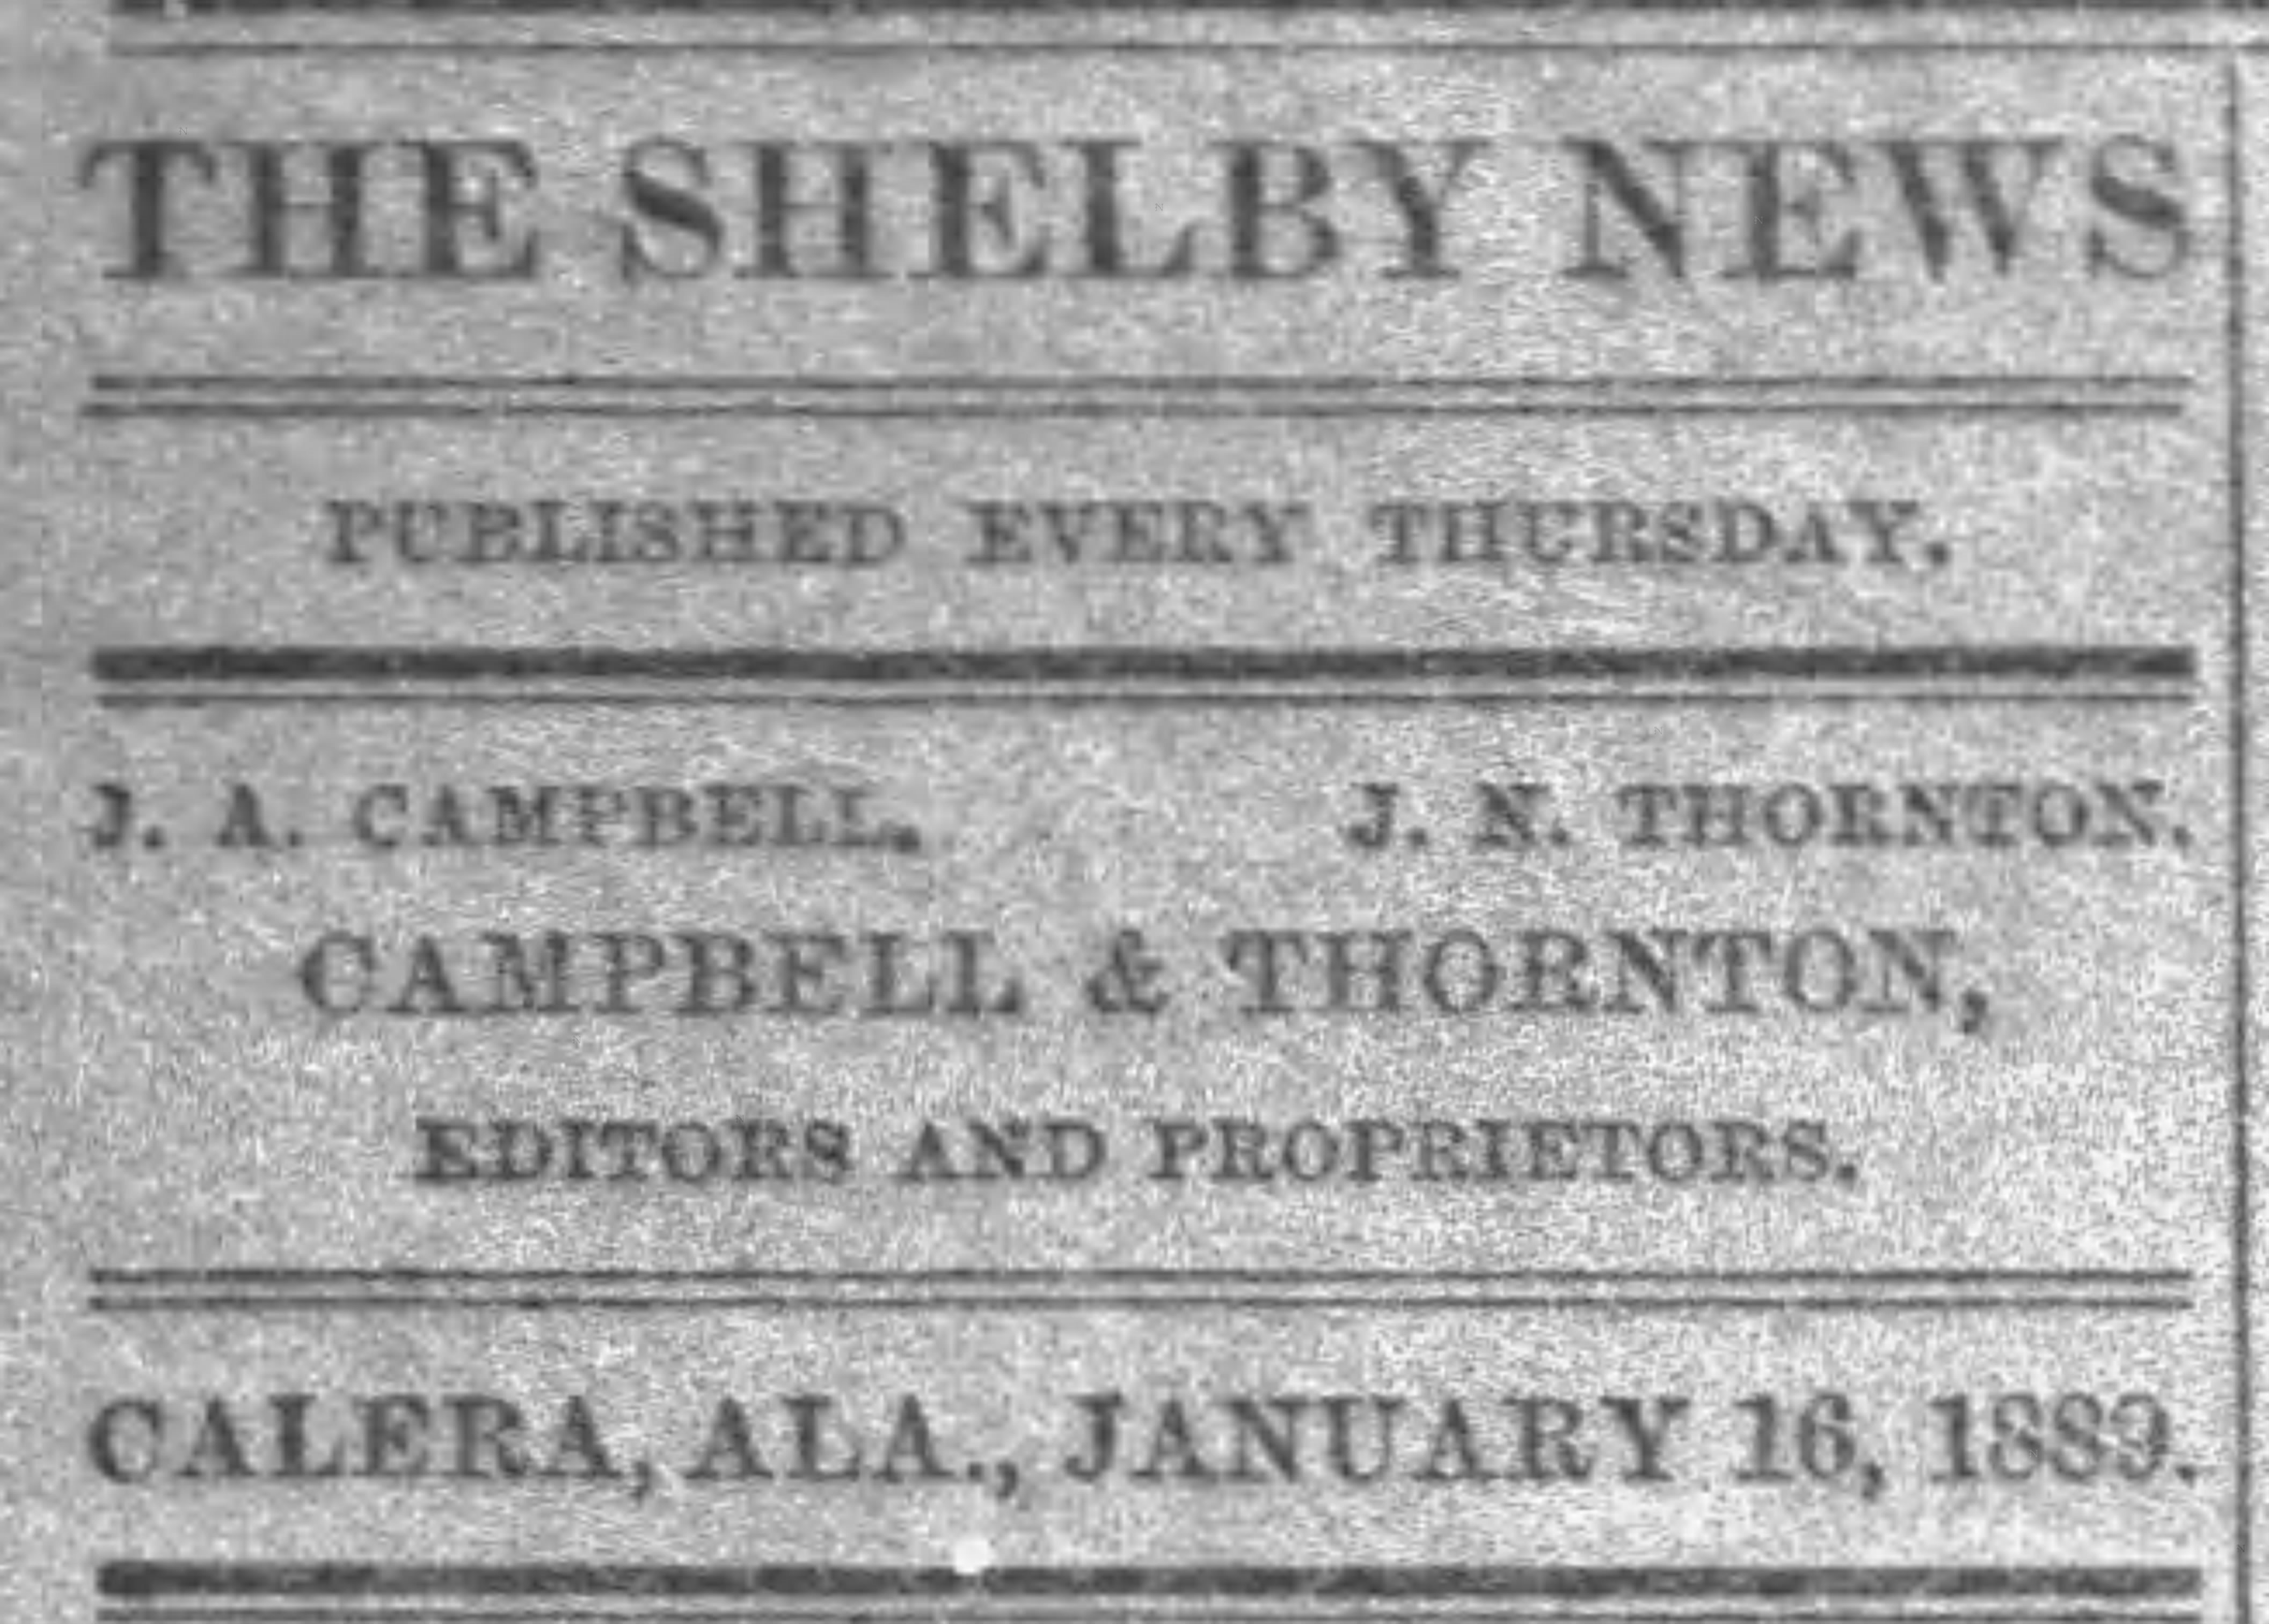 PATRON - Jan. 16, 1890 – Clanton, Chilton County local news, a death, and stray horse